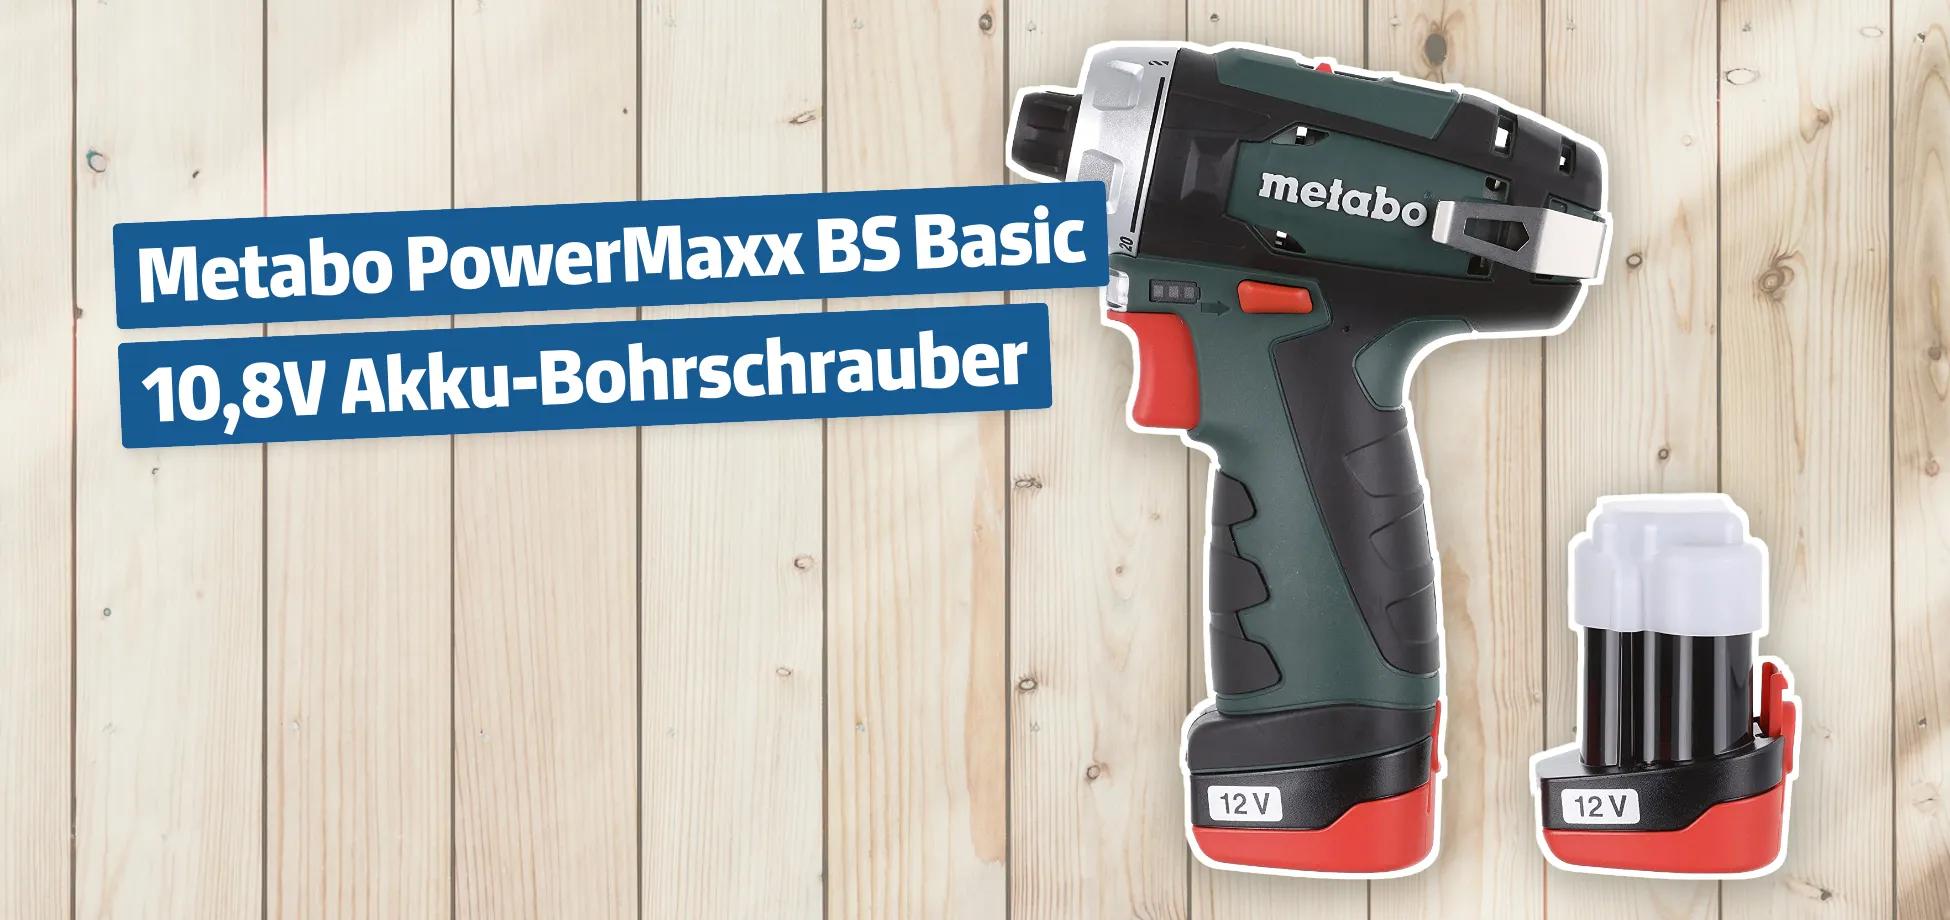 Metabo PowerMaxx BS Basic 10,8V Akku-Bohrschrauber